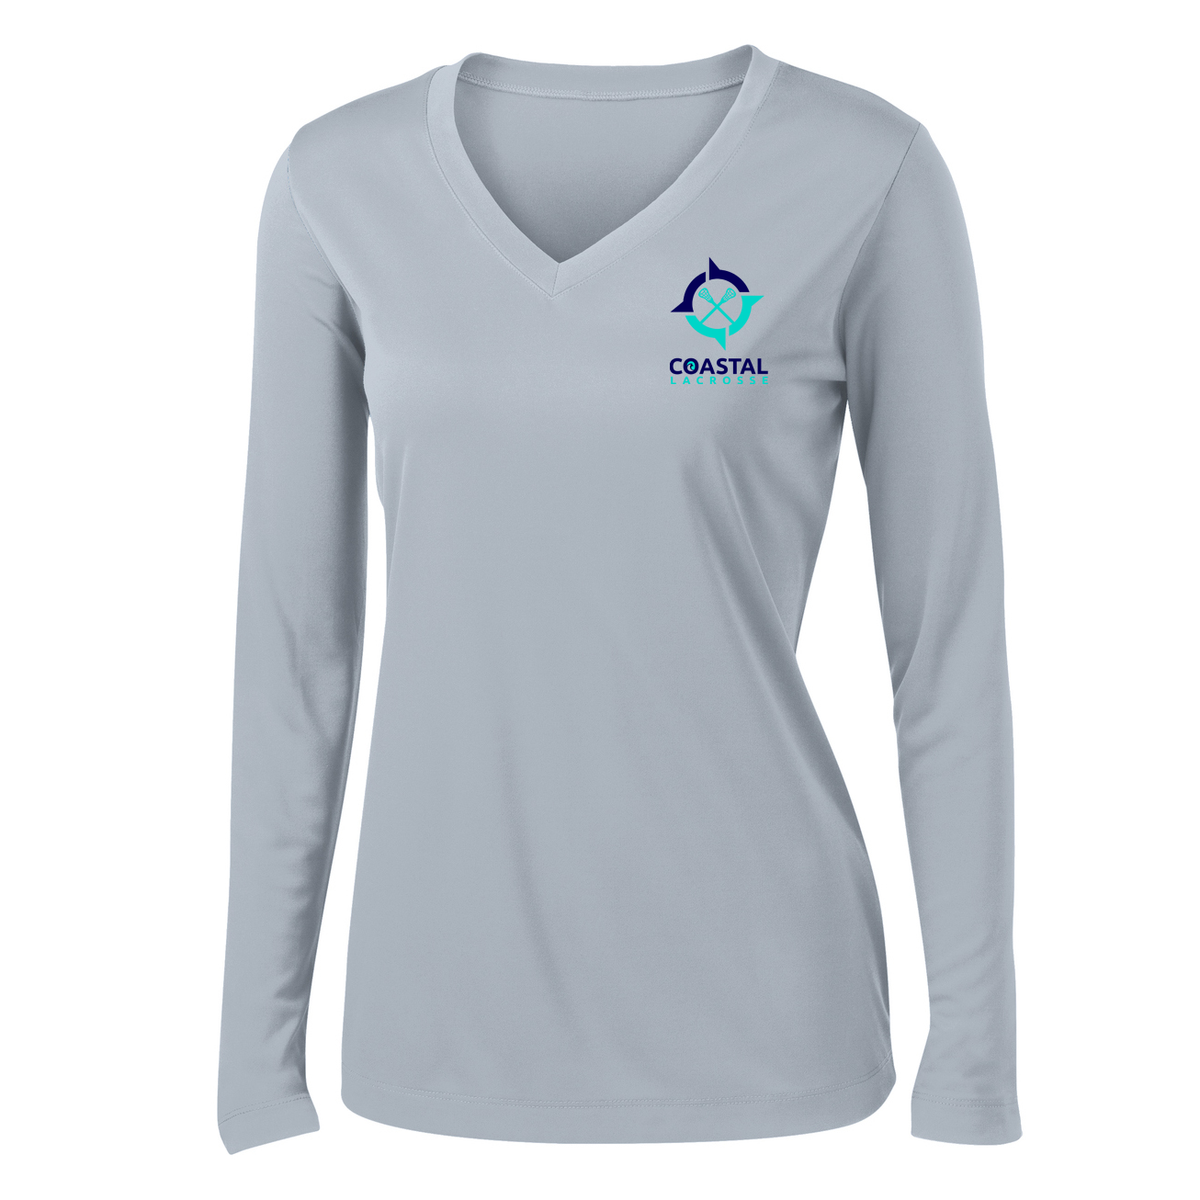 Coastal Lacrosse Women's Silver Long Sleeve Performance Shirt